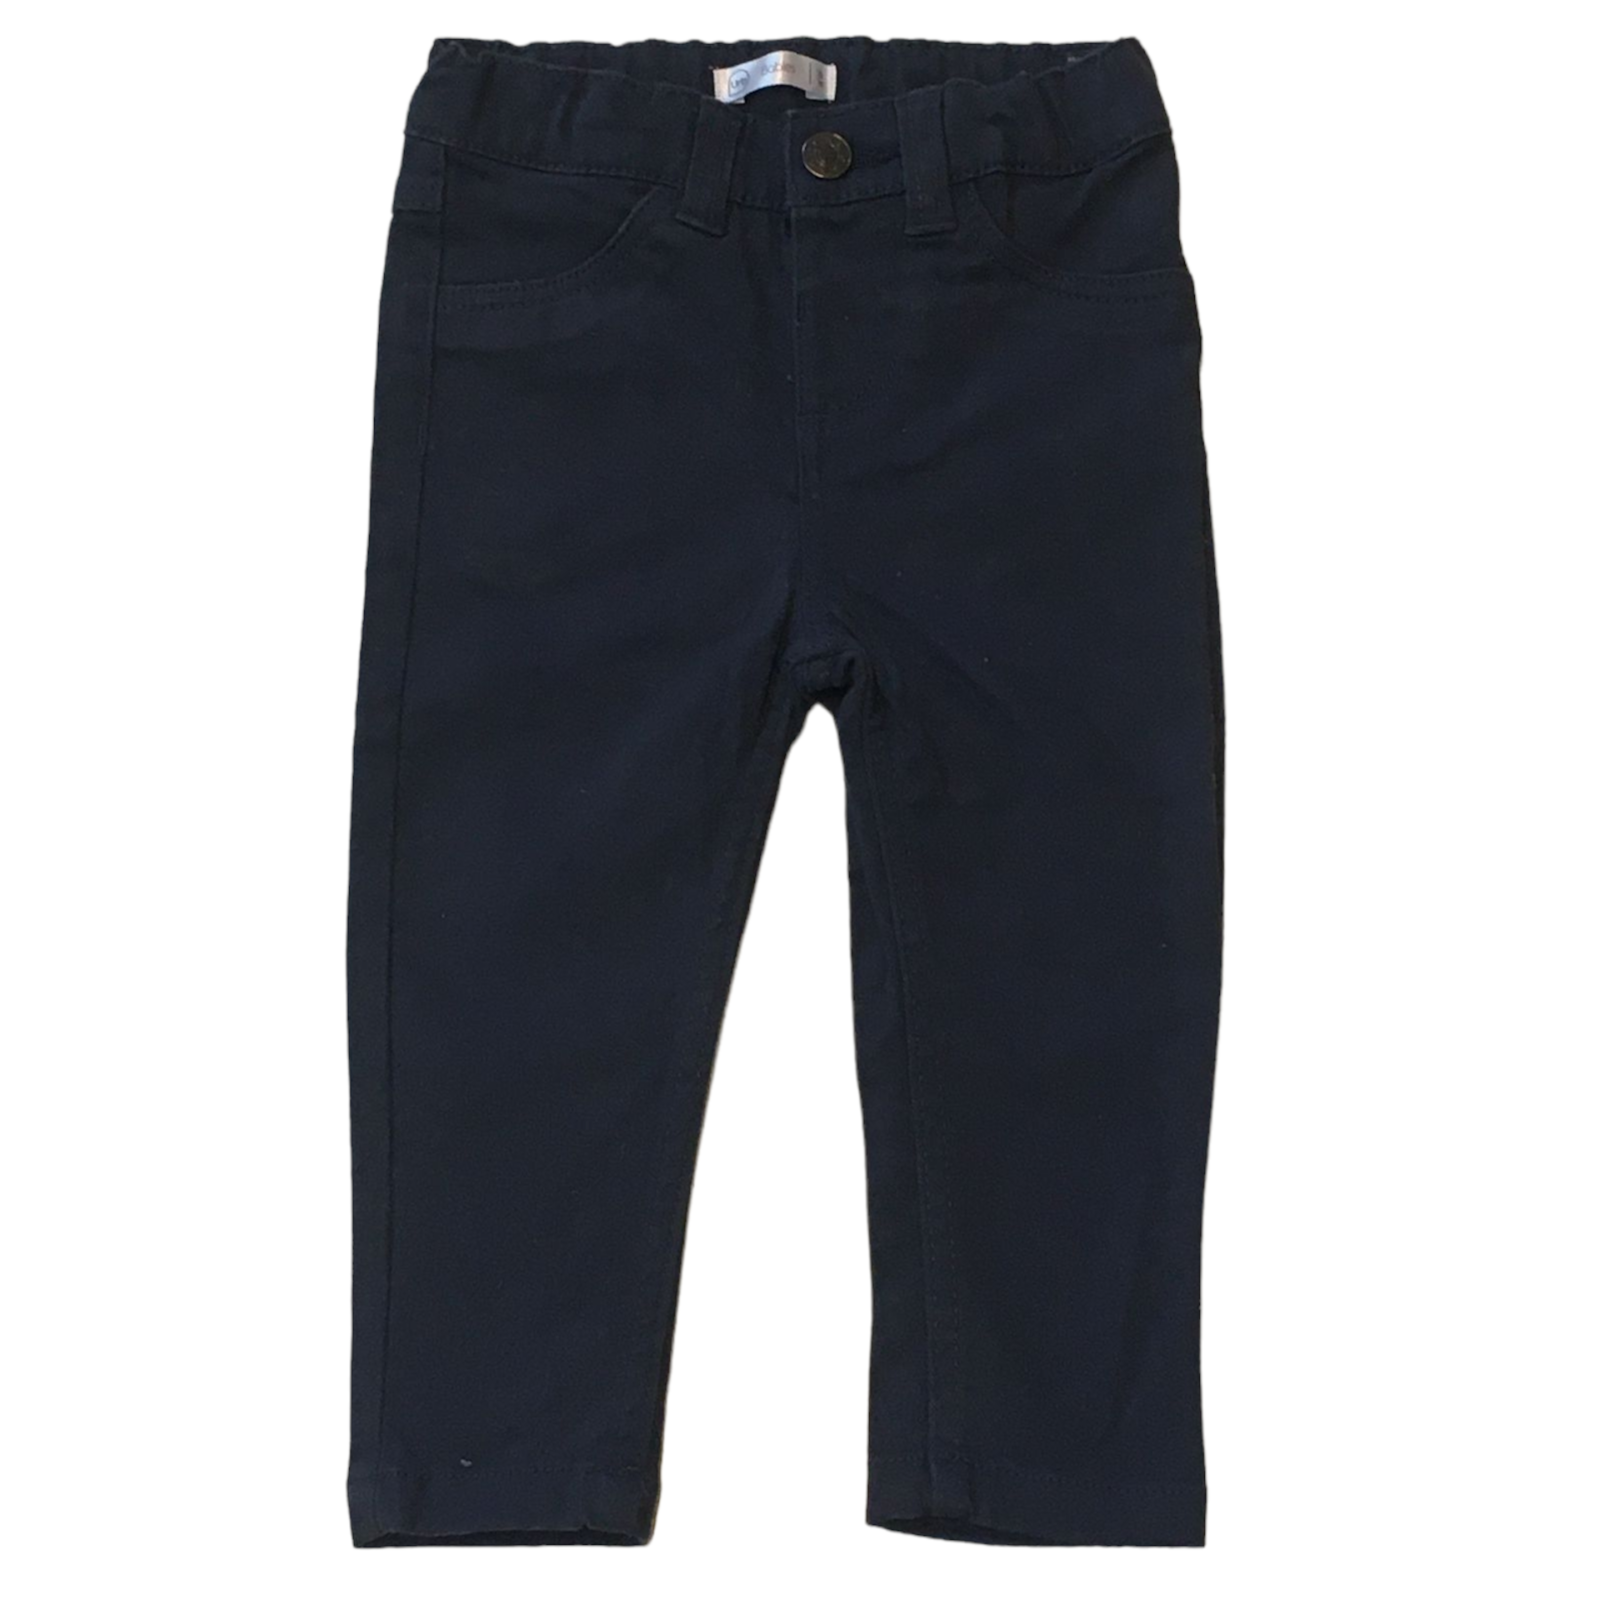 Pantalon azul con bolsillos, cintura ajustable